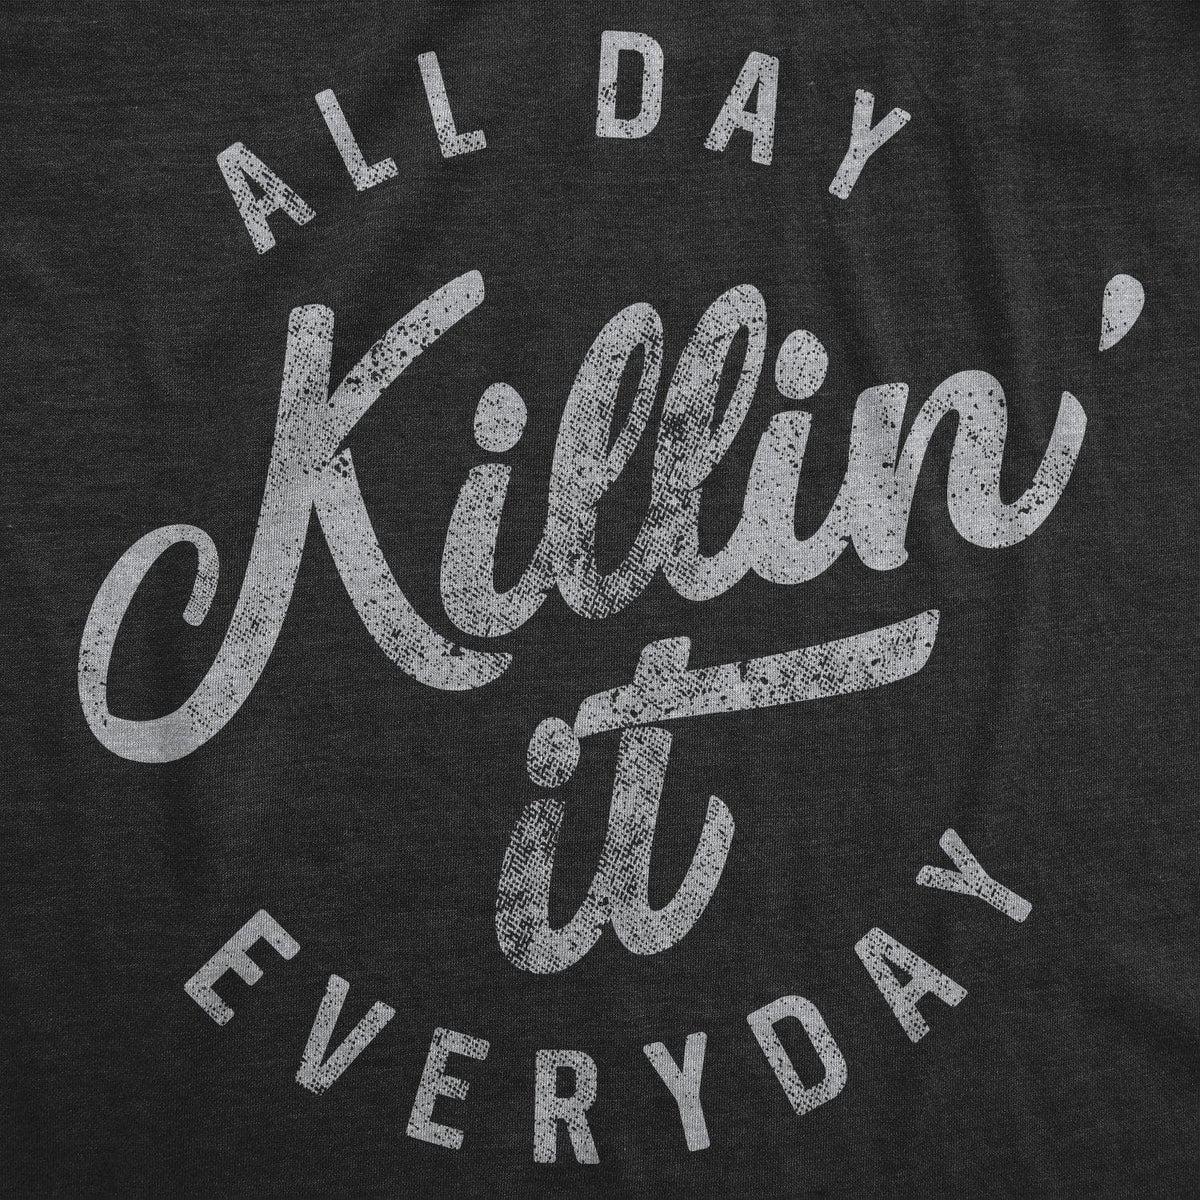 All Day Killin&#39; It Everyday Men&#39;s Tshirt - Crazy Dog T-Shirts